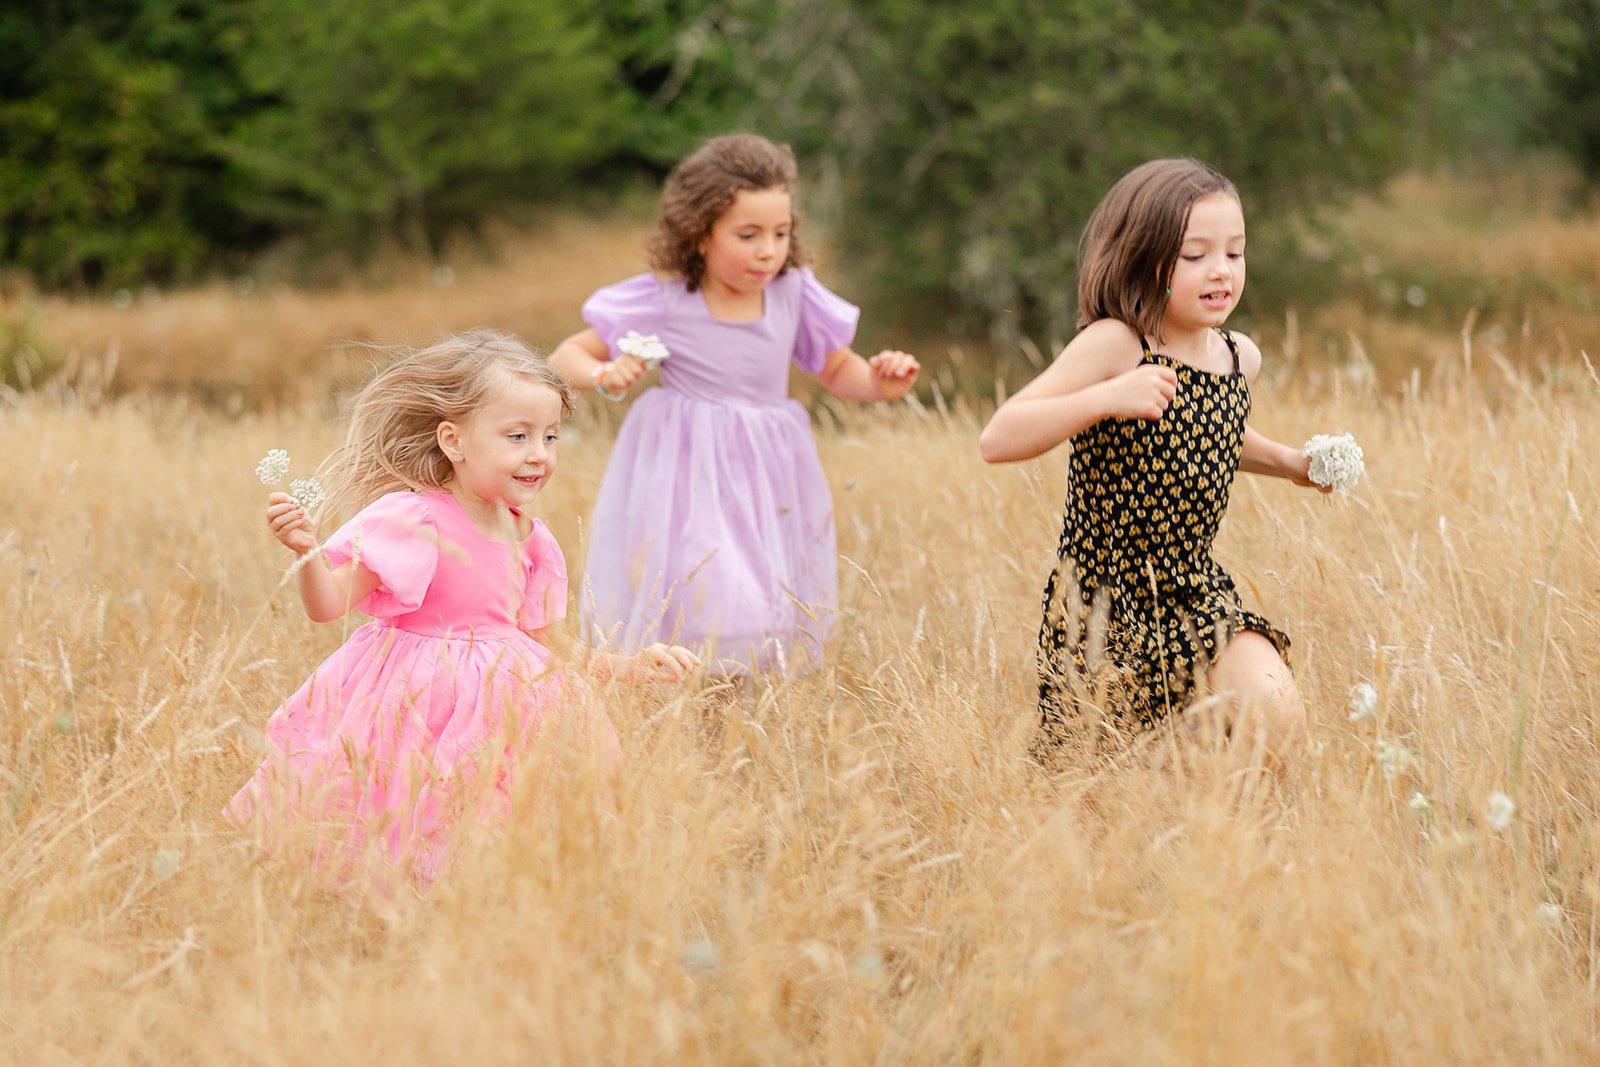 Children running in the field during a wedding